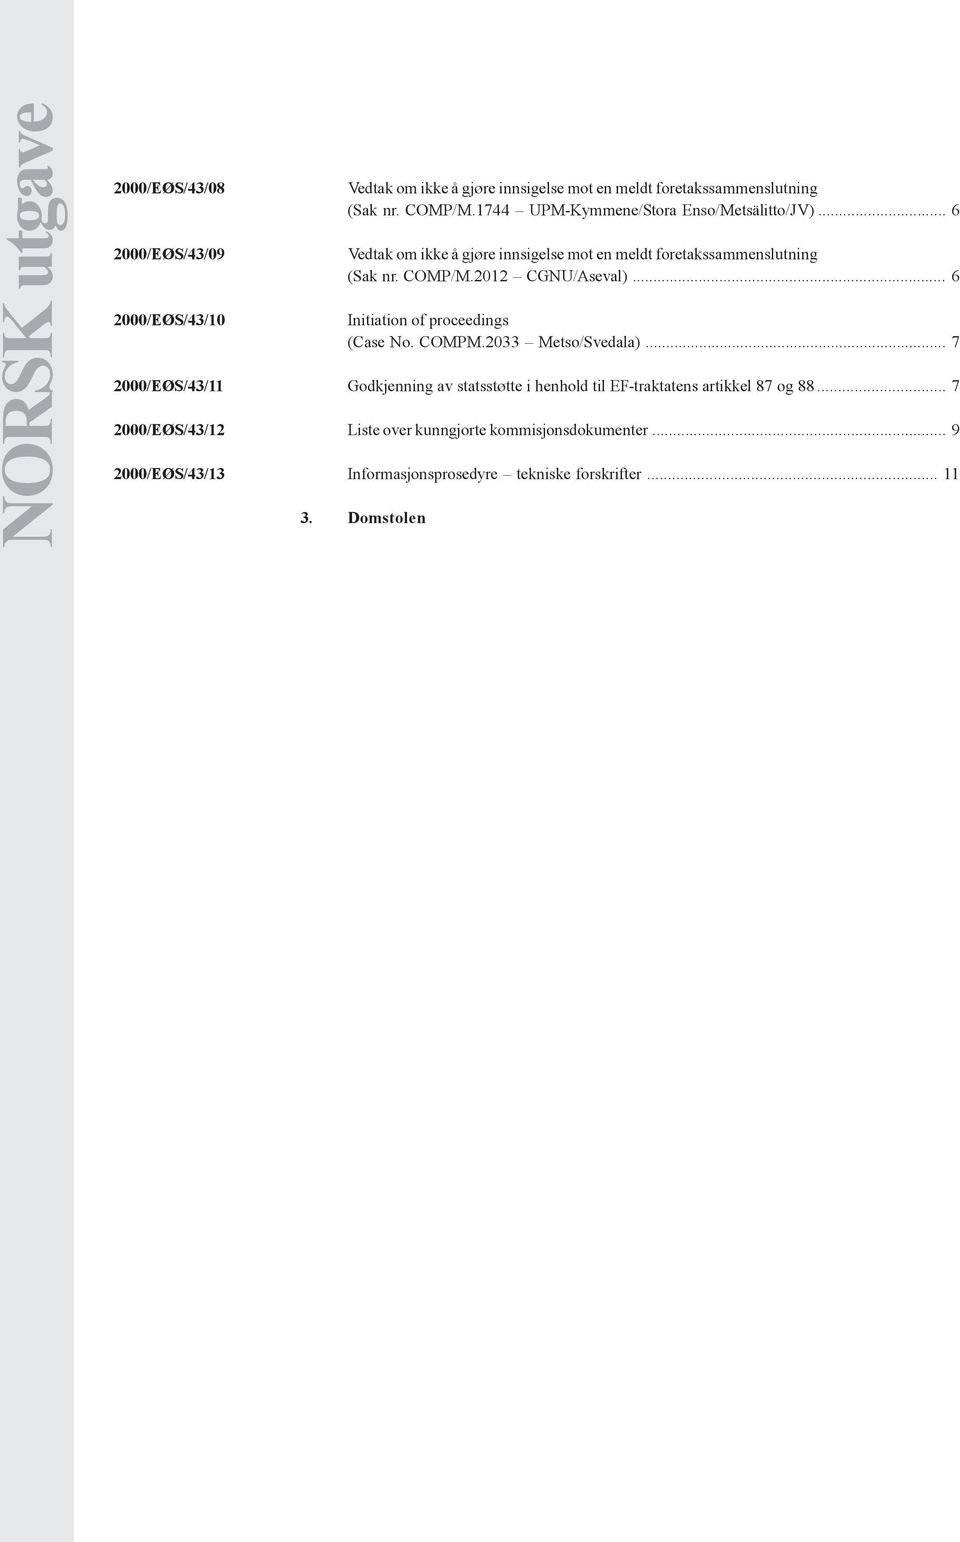 2012 CGNU/Aseval)... 6 Initiation of proceedings (Case No. COMPM.2033 Metso/Svedala).